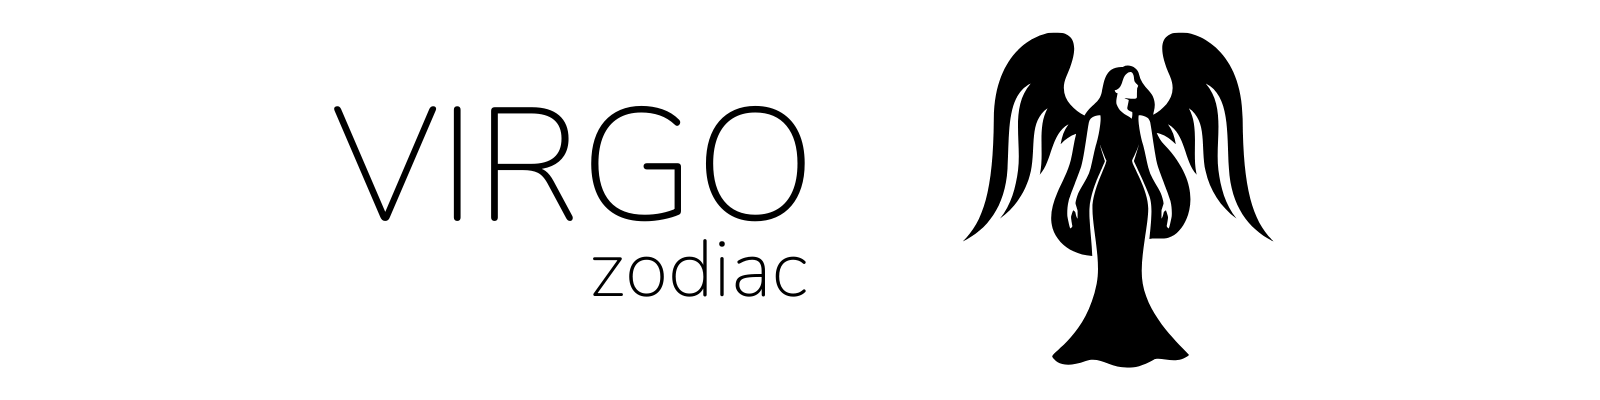 Image of Virgo zodiac sign.